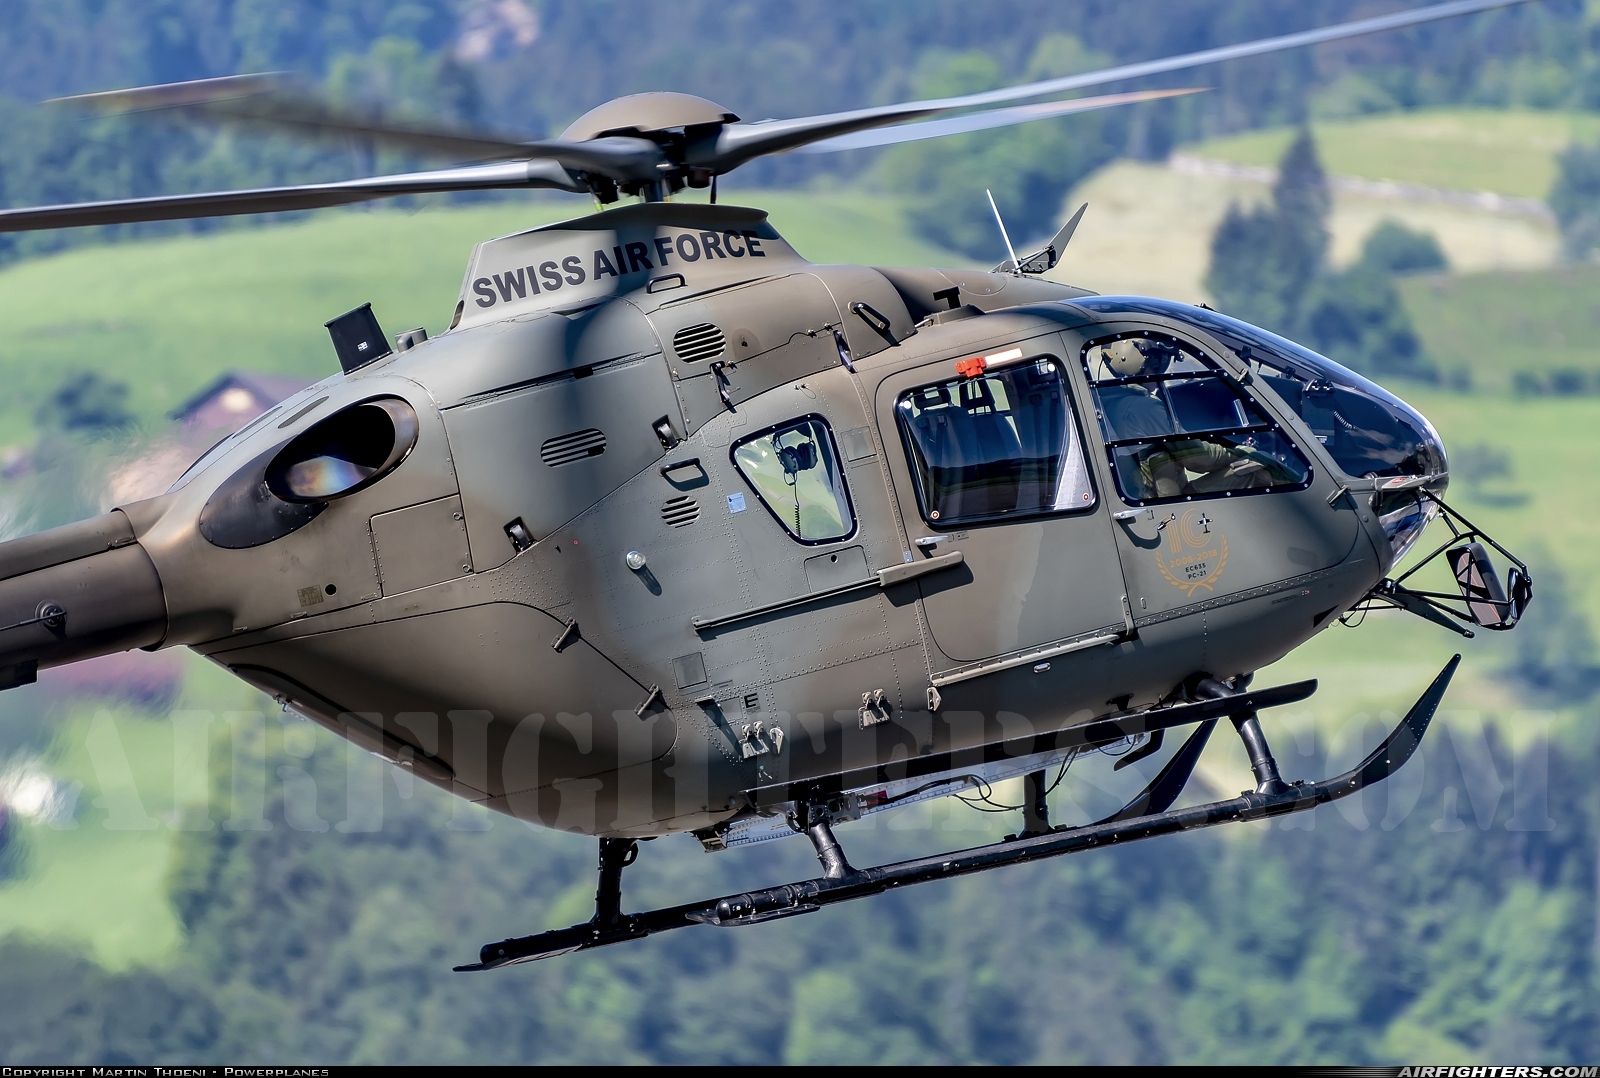 Switzerland - Air Force Eurocopter TH05 (EC-635P2+) T-366 at Alpnach (LSMA), Switzerland